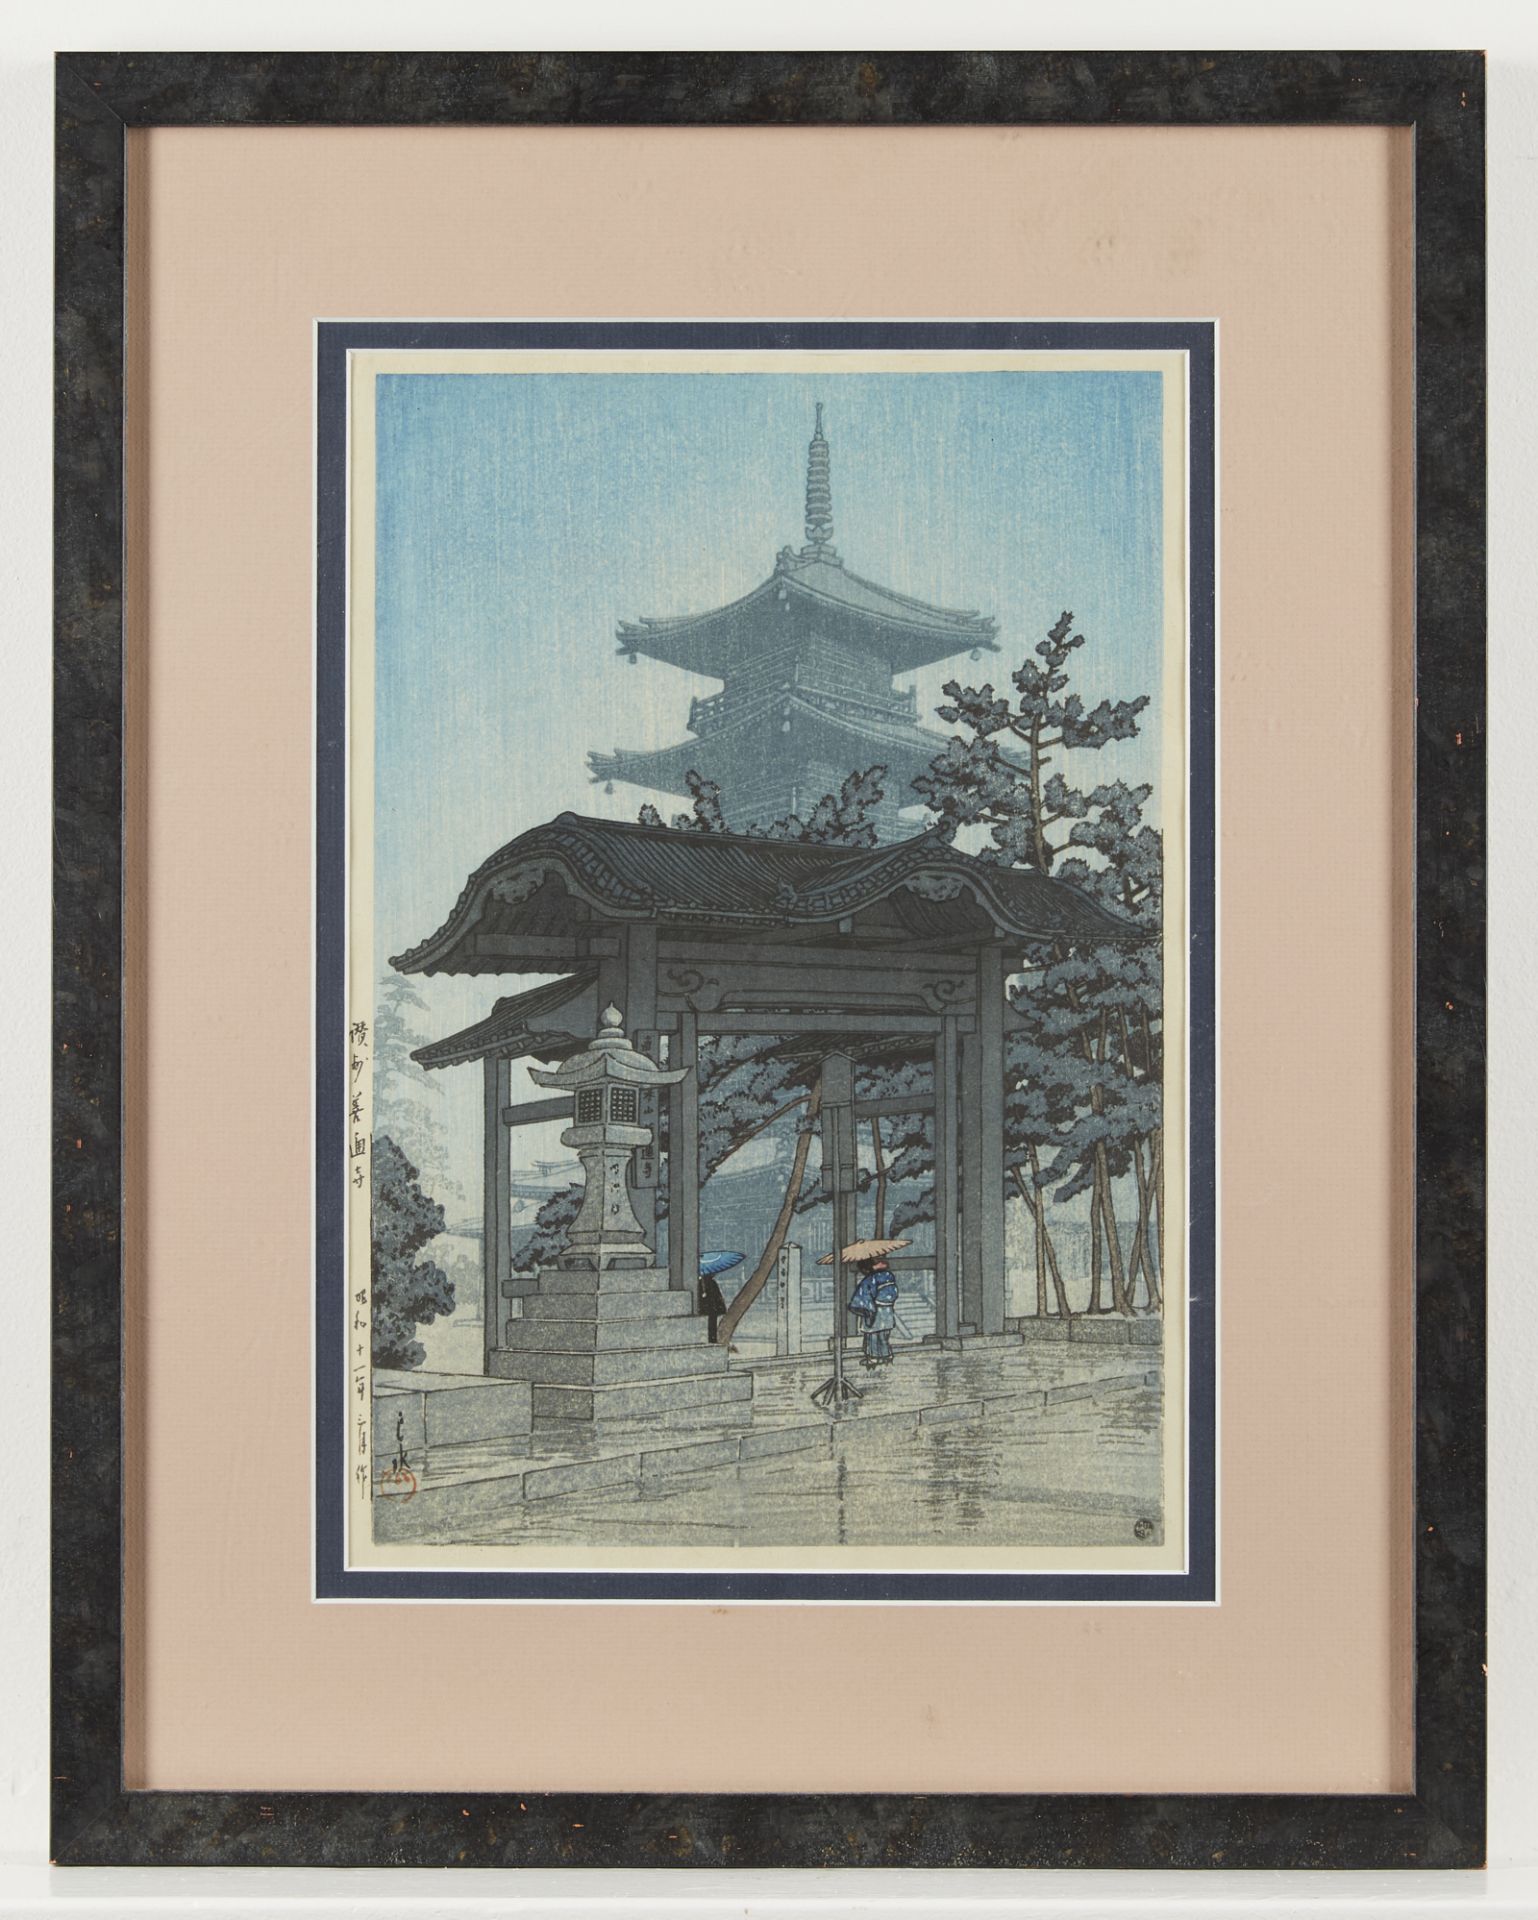 Hasui Kawase "Zenetsu Temple" Woodblock Print - Image 3 of 8